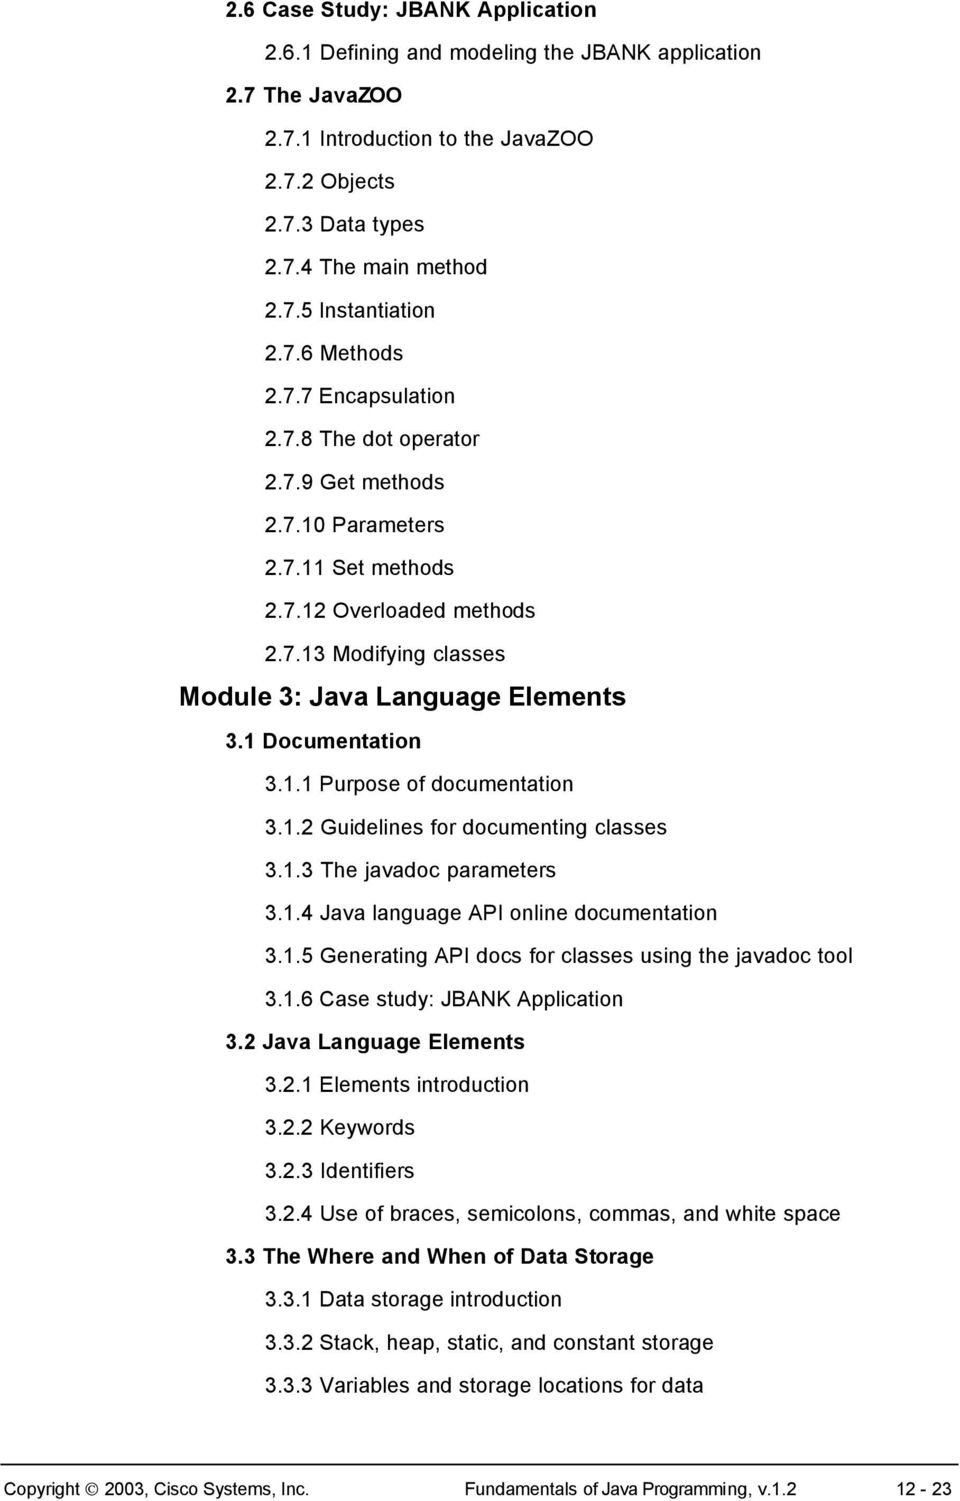 1 Documentation 3.1.1 Purpose of documentation 3.1.2 Guidelines for documenting classes 3.1.3 The javadoc parameters 3.1.4 Java language API online documentation 3.1.5 Generating API docs for classes using the javadoc tool 3.